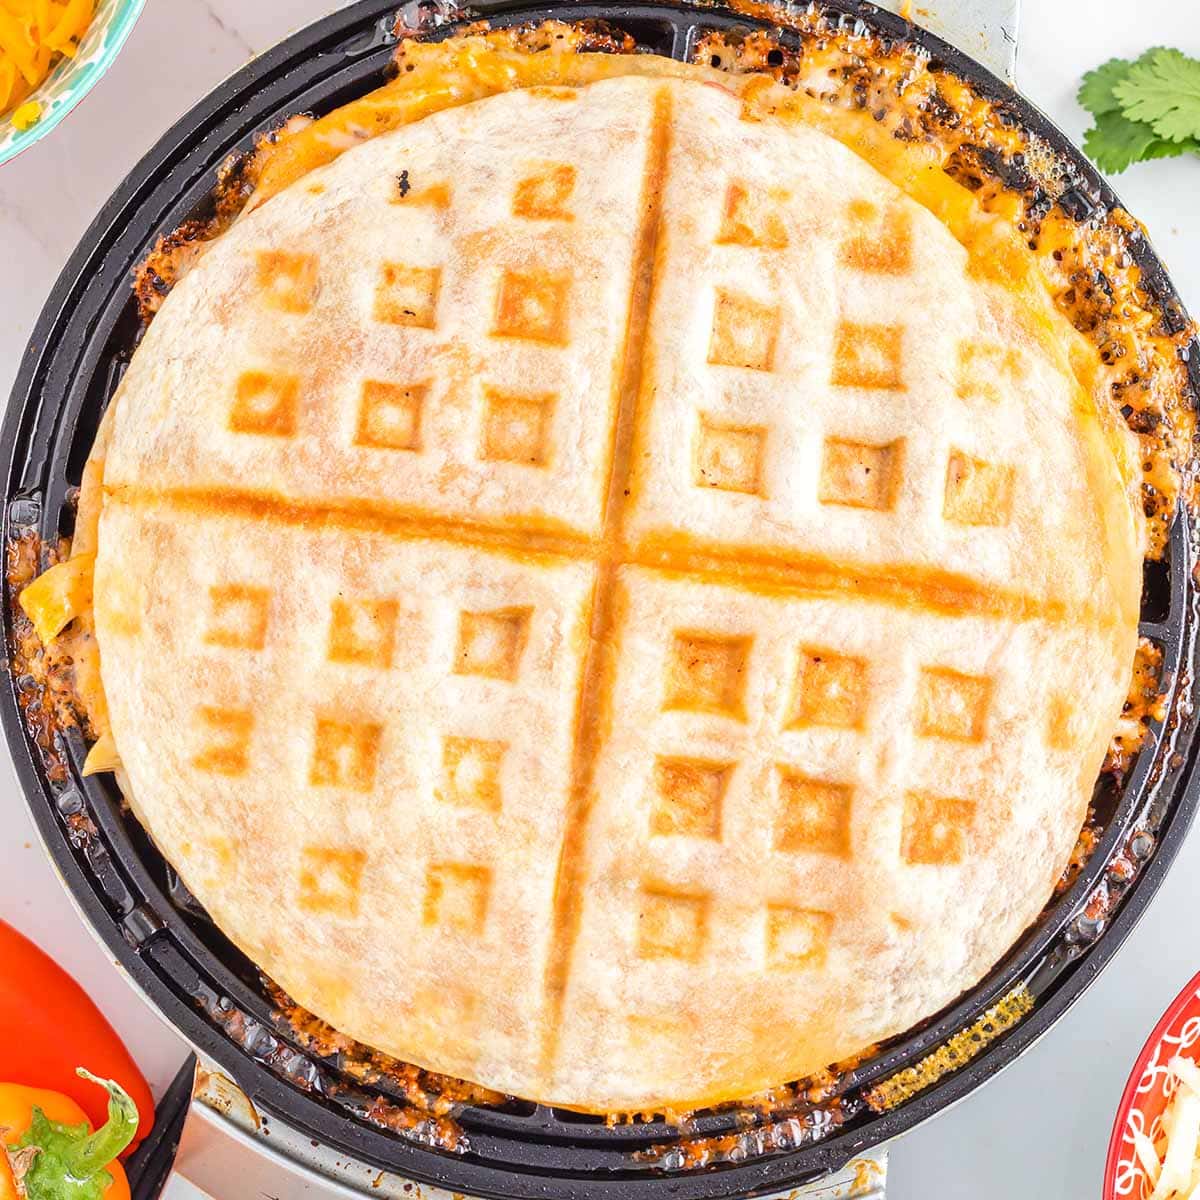 Best Waffled Quesadillas Recipe - How To Make Waffled Quesadillas